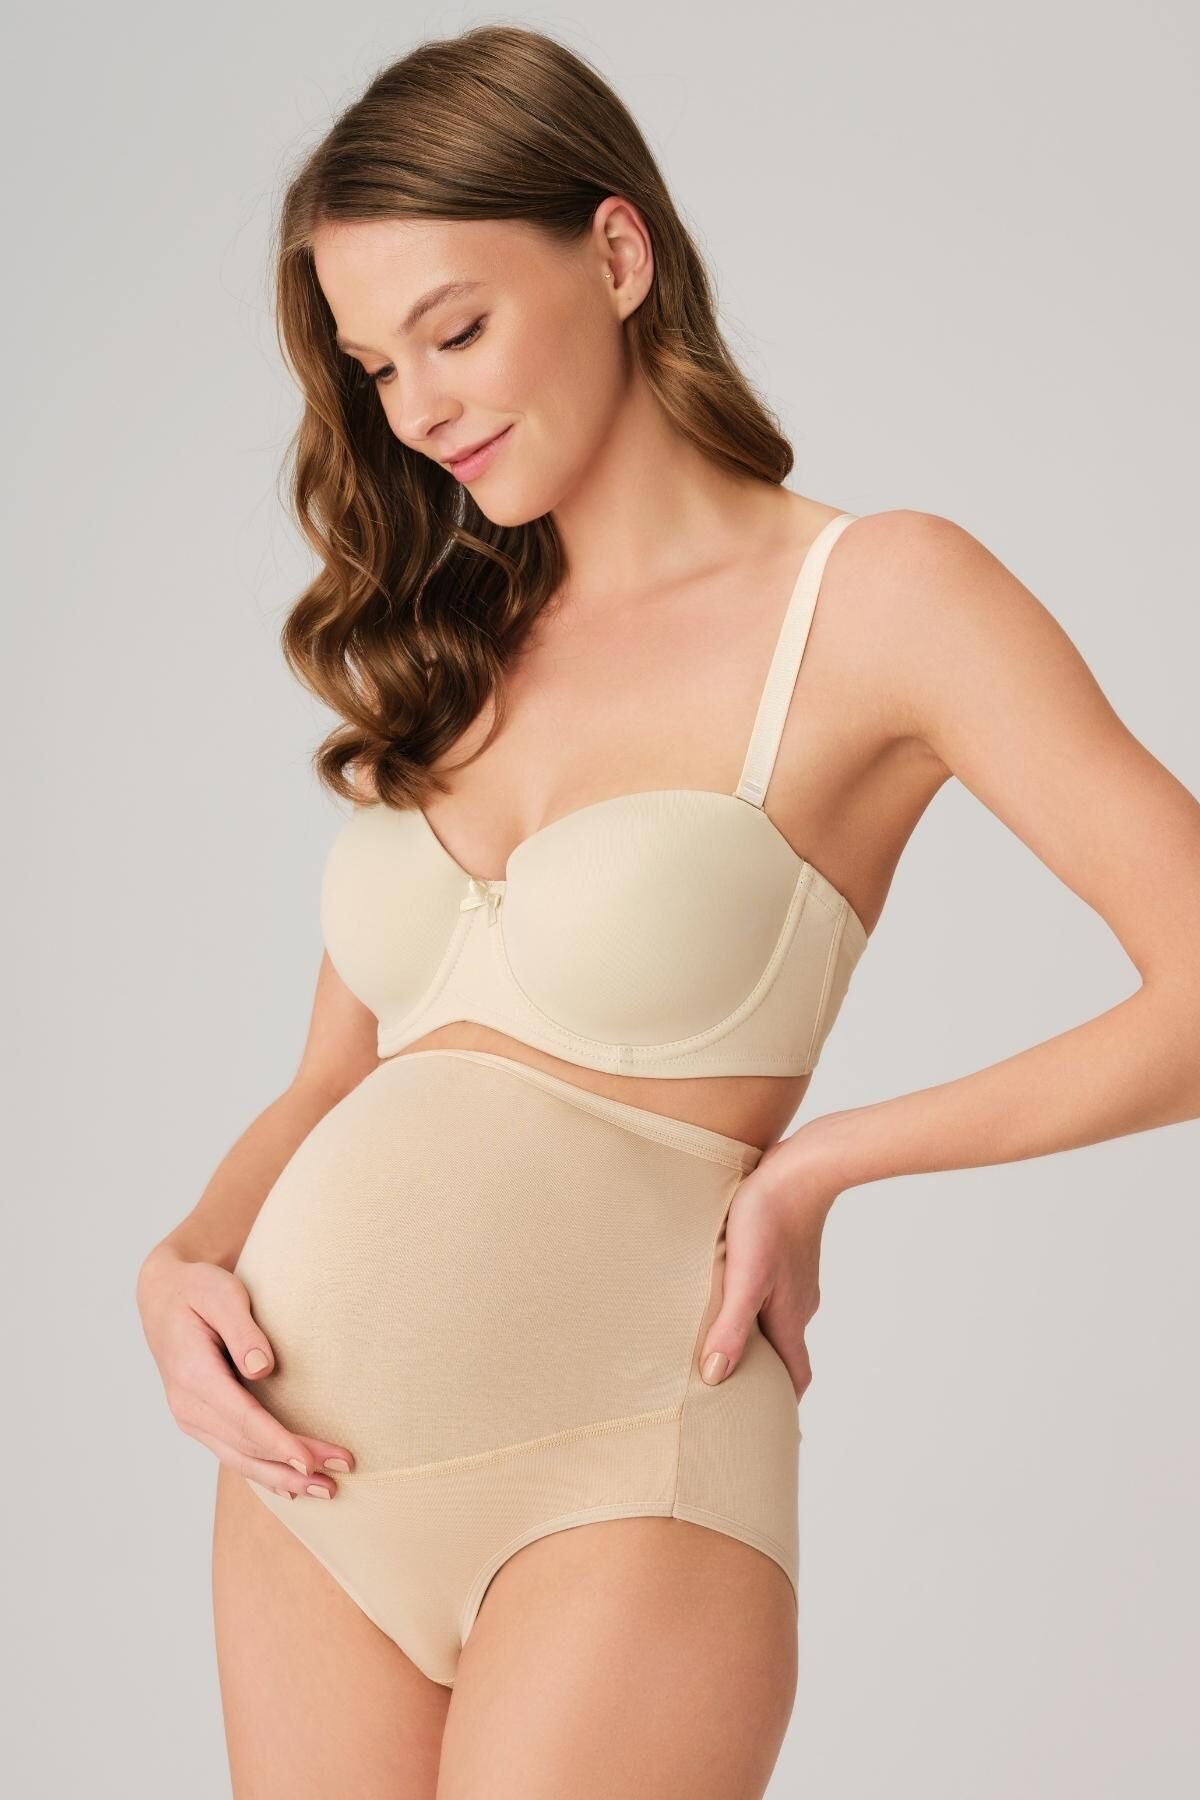 Shopymommy 2588 Modal Cotton High Waist Maternity Panties Skin